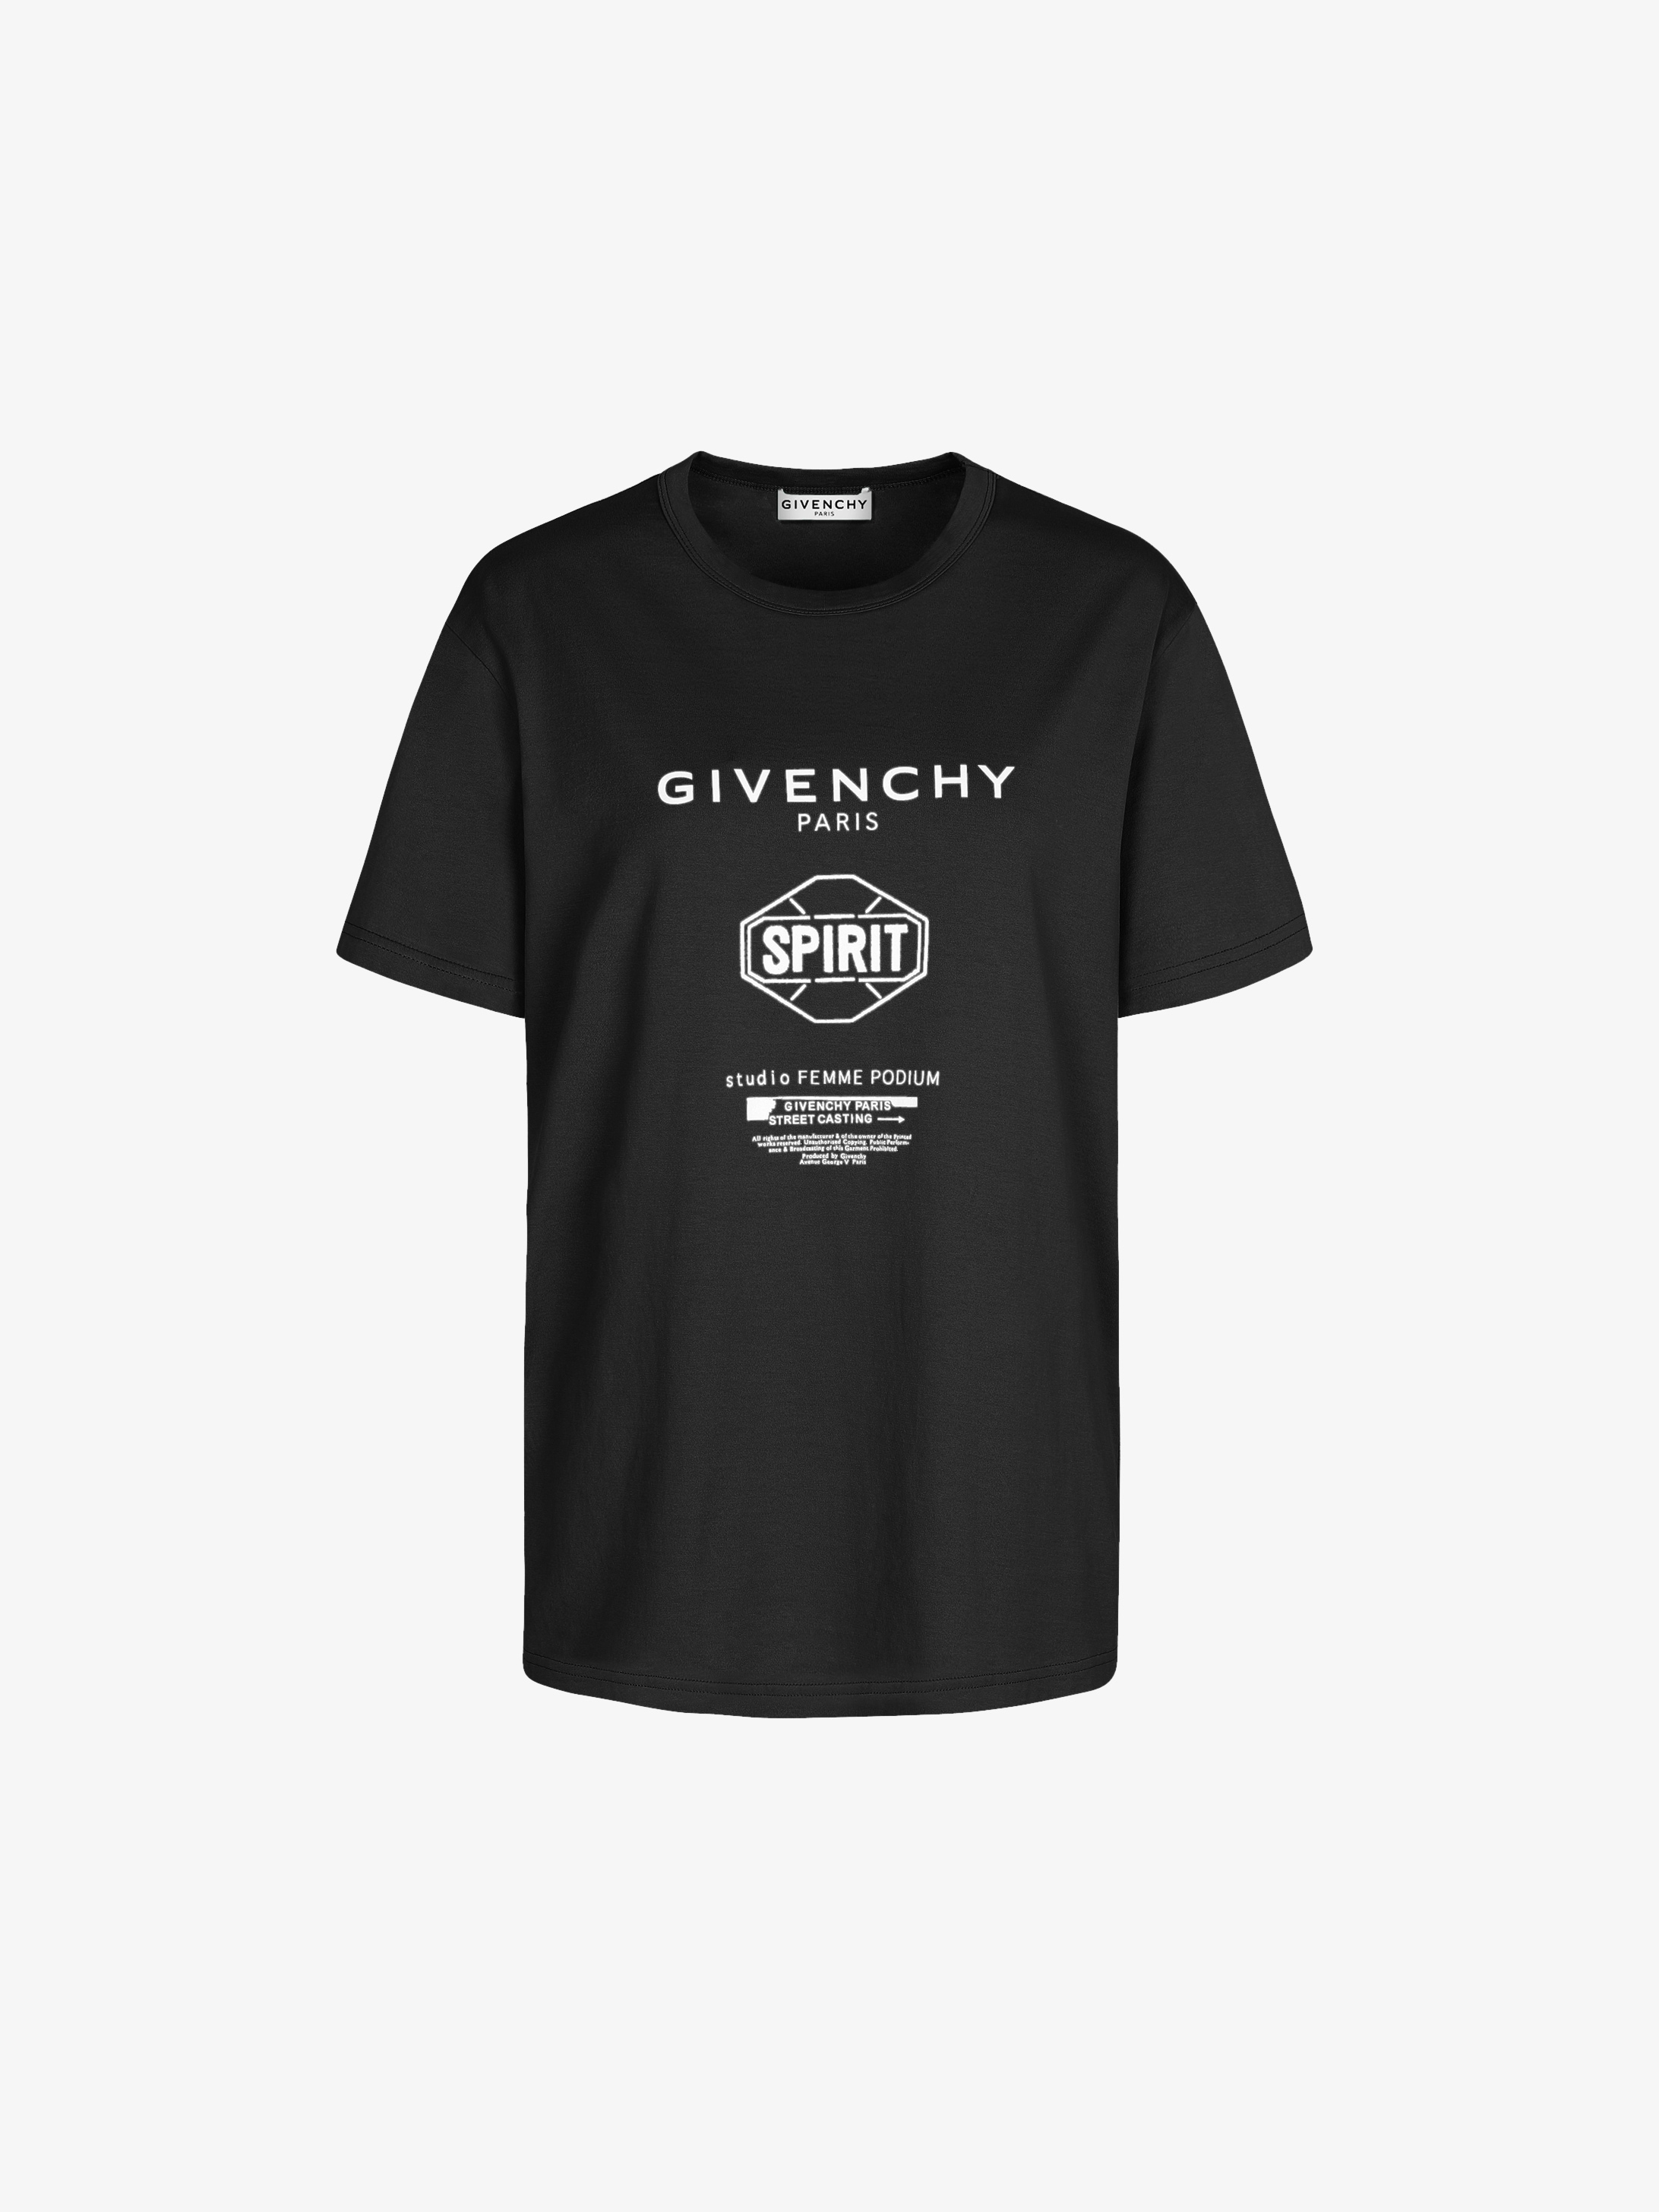 Givenchy paris vintage oversized t shirt tampa